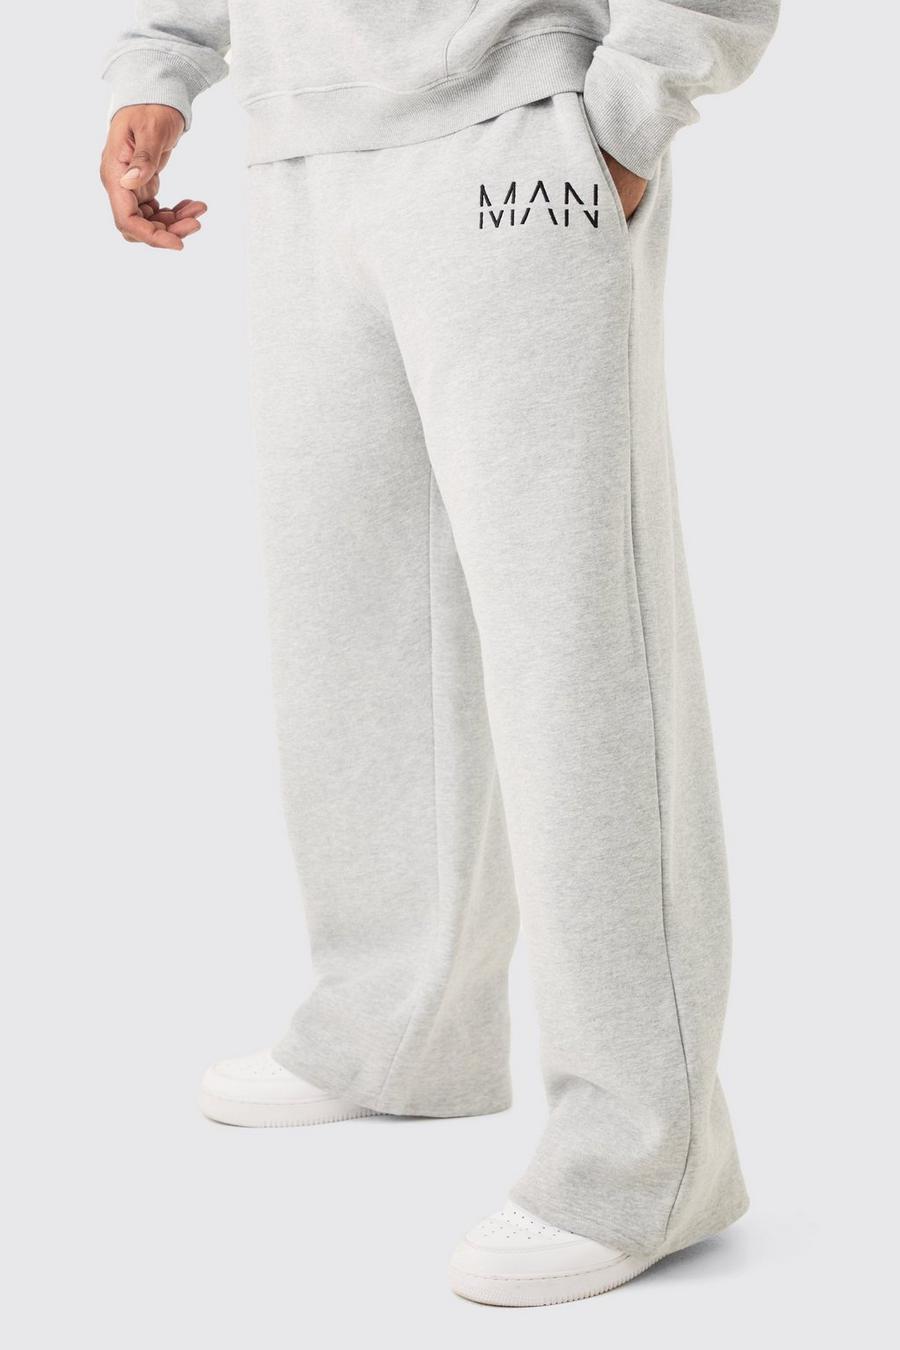 Pantaloni tuta Plus Size Man Dash rilassati in mélange grigio, Grey marl